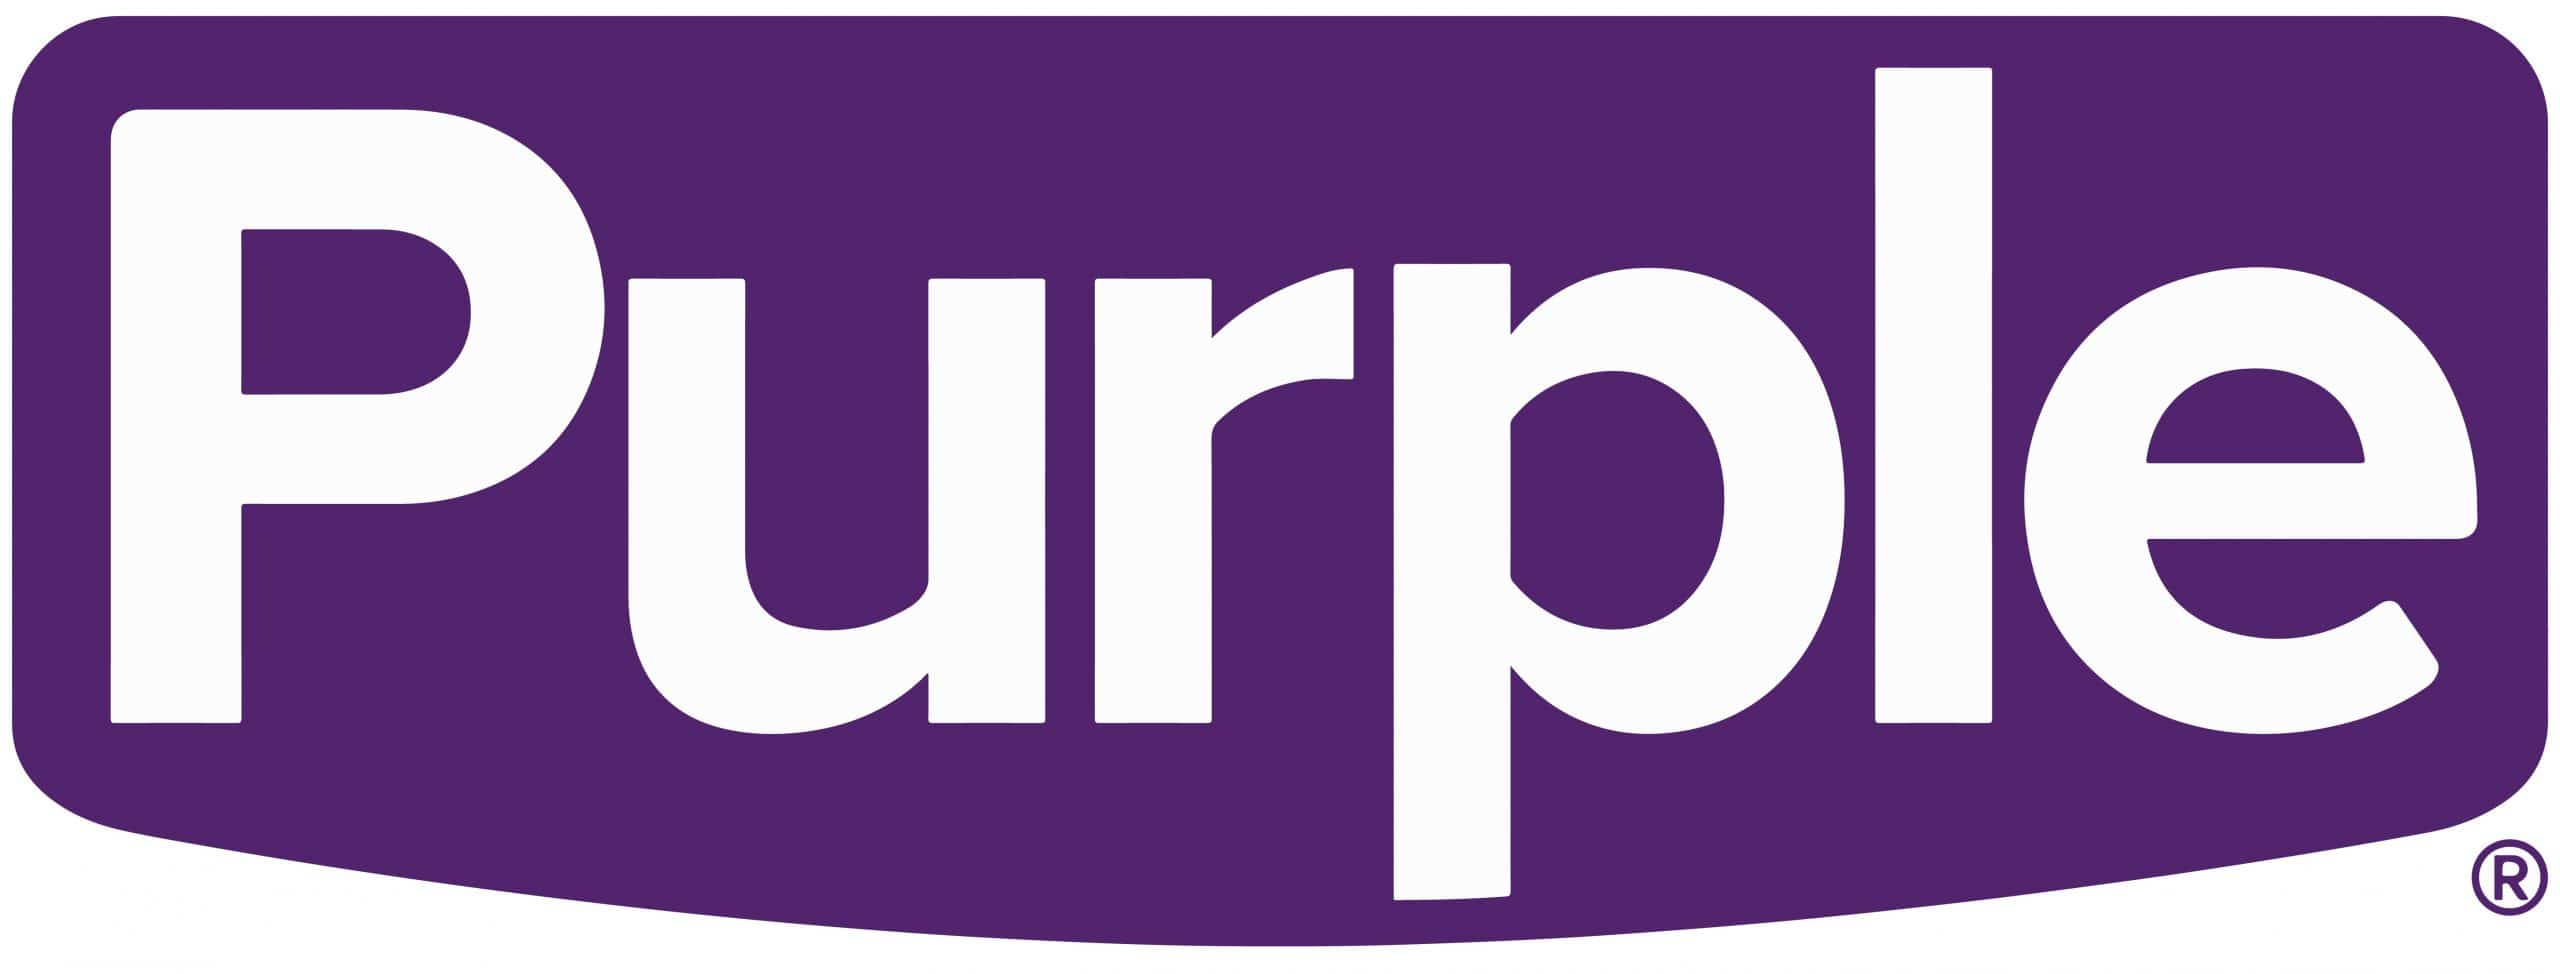 (Purple VRS logo) Purple rectangle with slight protruding arc on bottom. Inside rectangle in white text: PURPLE